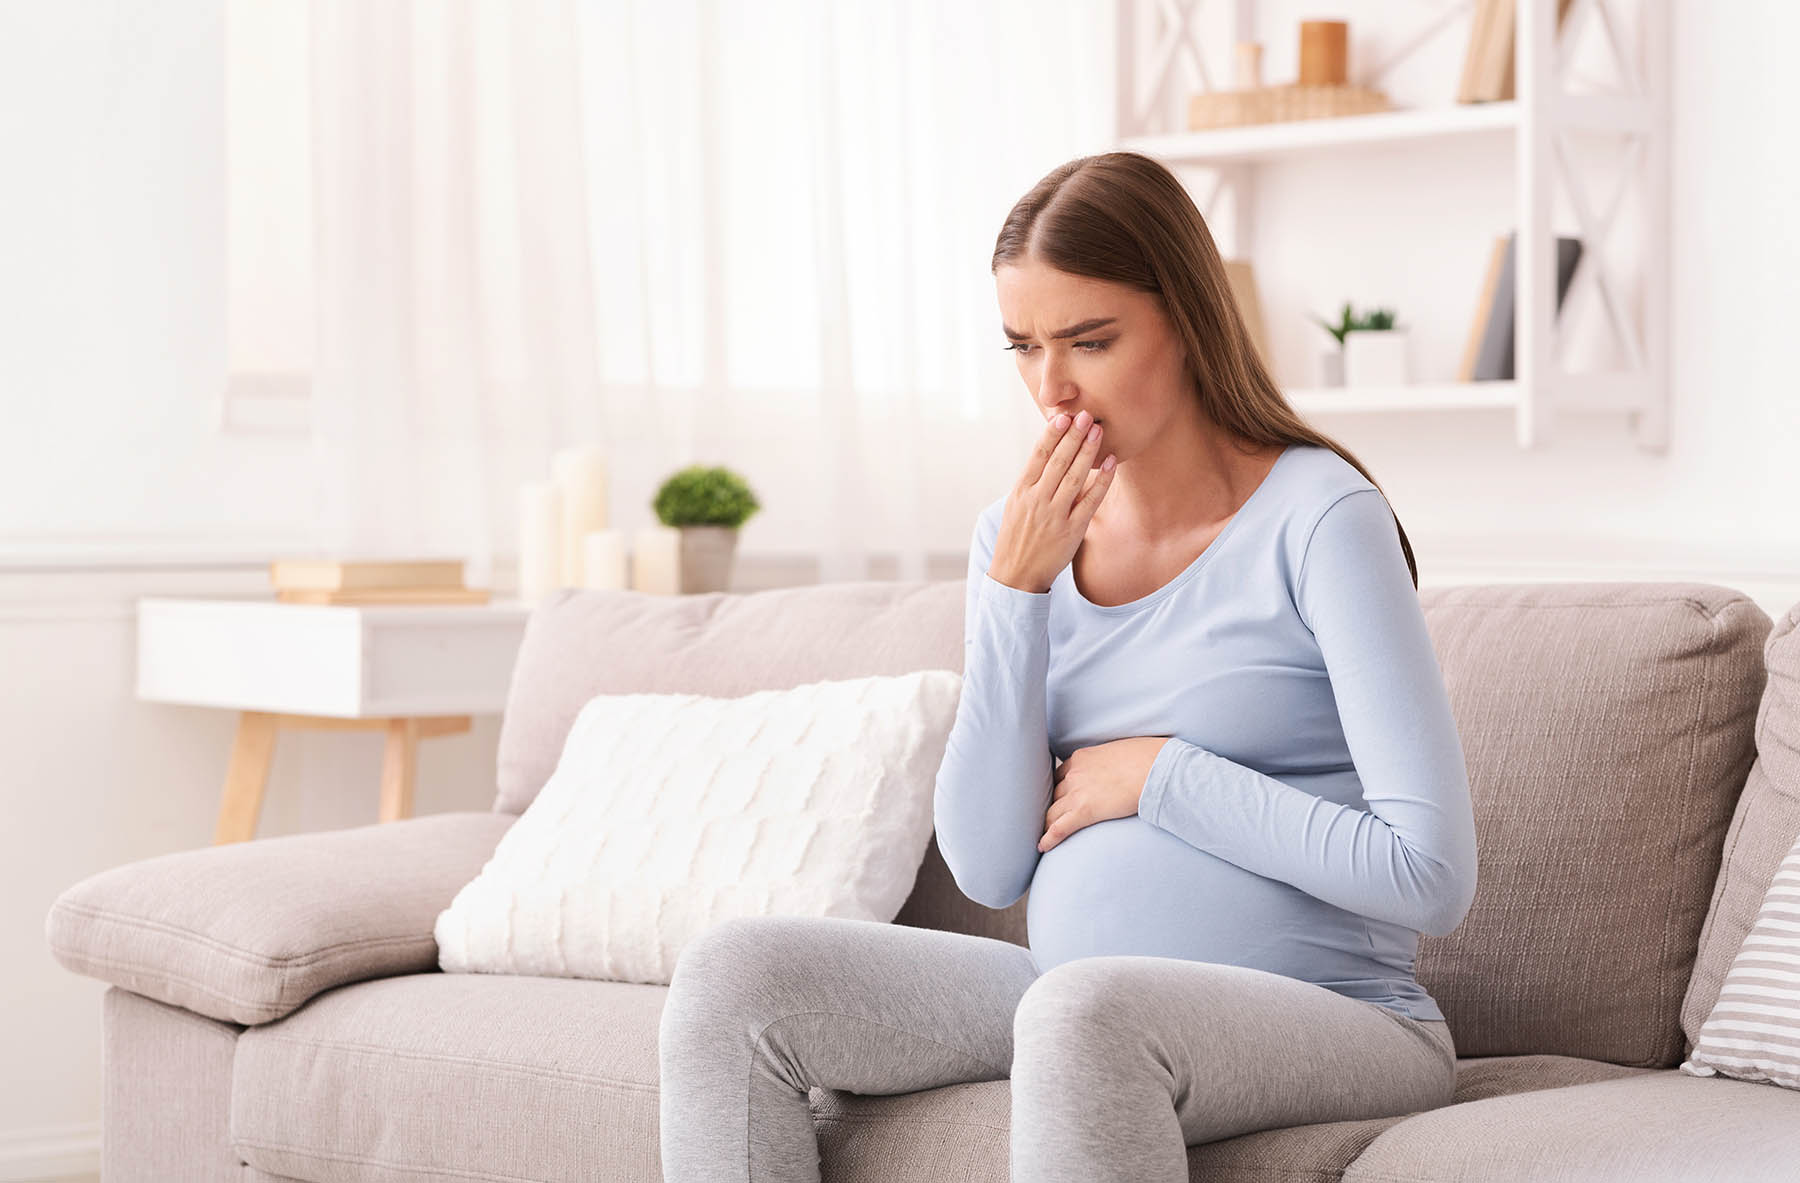 Pregnancy Morning Sickness & Nausea: A Good Sign?